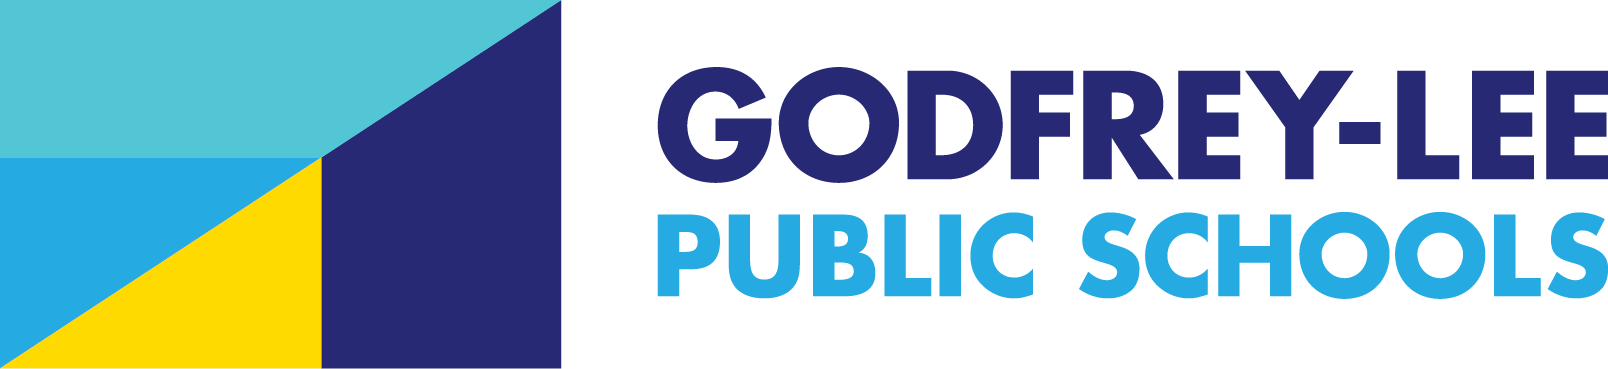 Godfre-Lee Public Schools logo